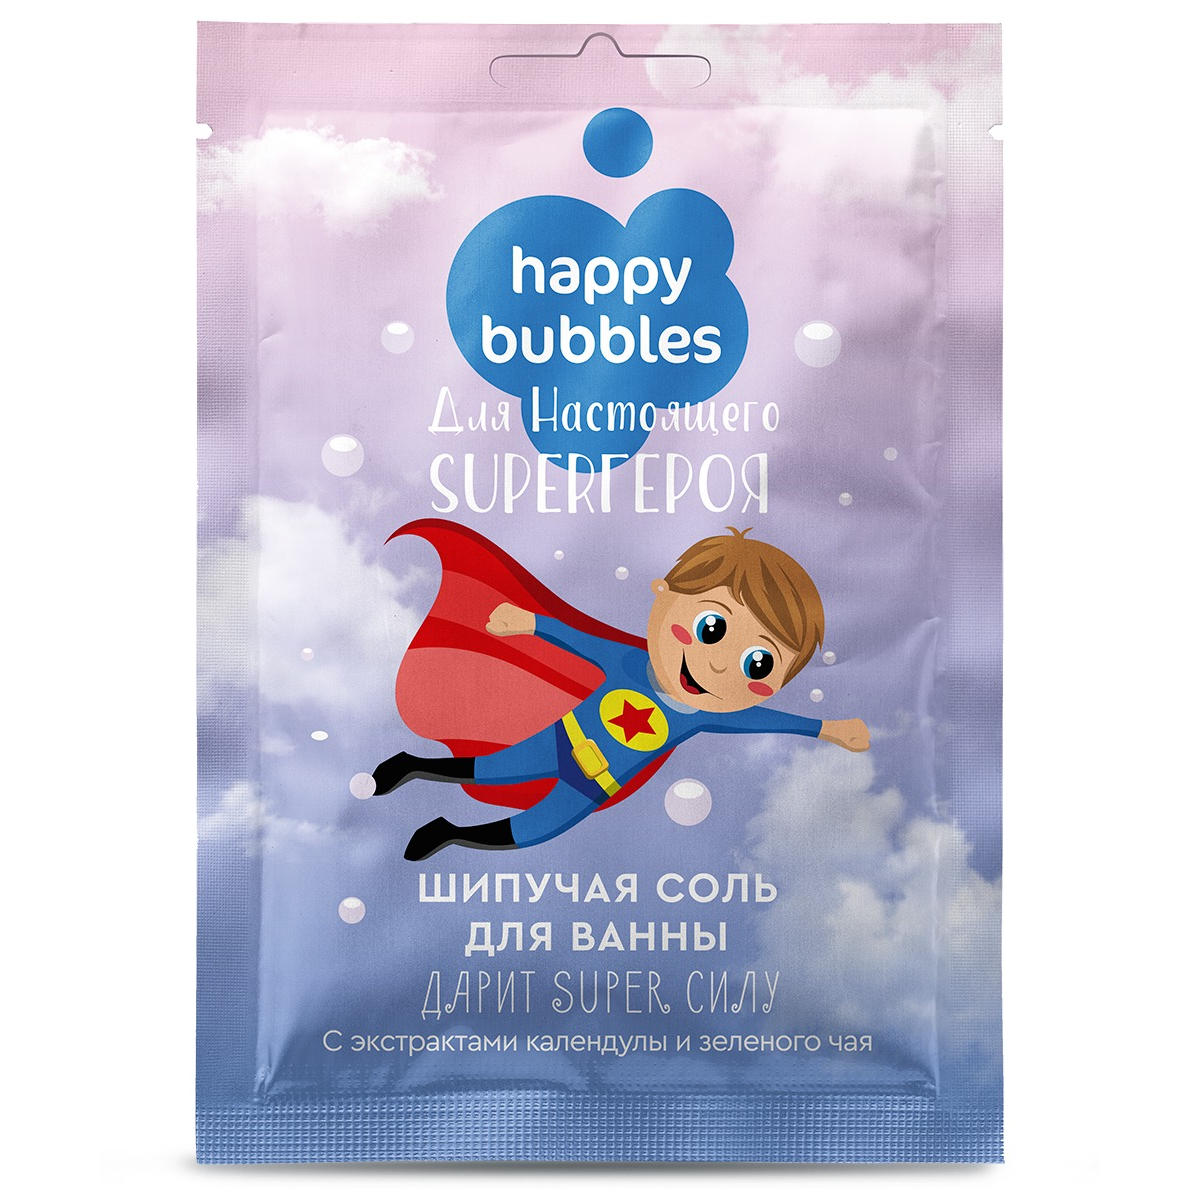 Соль для ванны Happy bubbles для настоя Super героя 100г детская соль для ванны